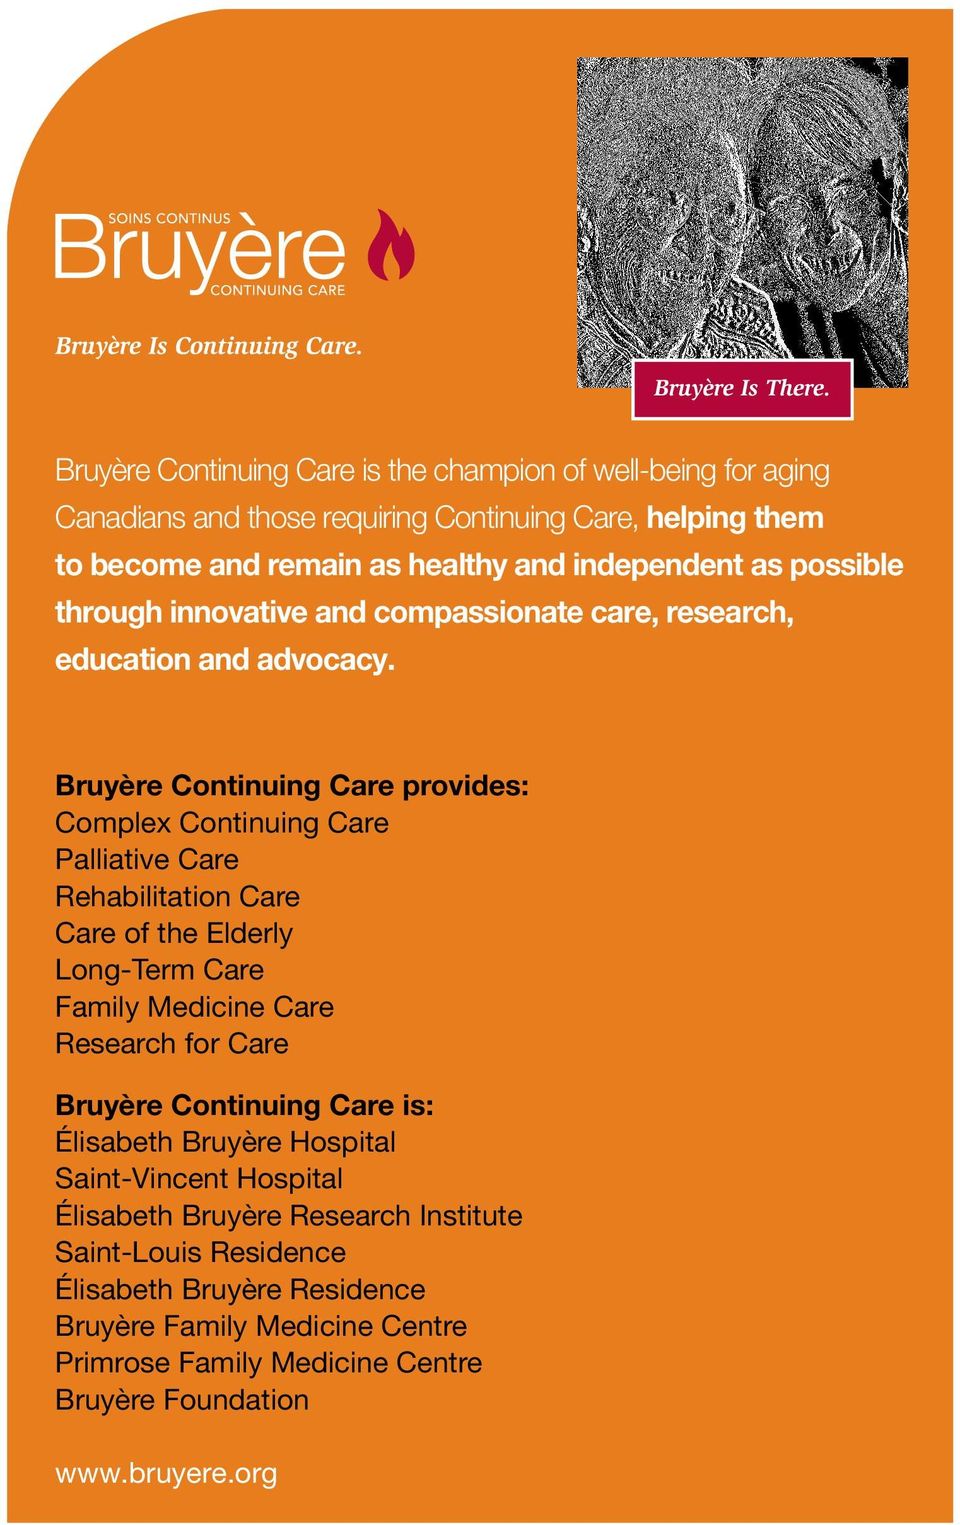 Bruyère Continuing Care provides: Complex Continuing Care Palliative Care Rehabilitation Care Care of the Elderly Long-Term Care Family Medicine Care Research for Care